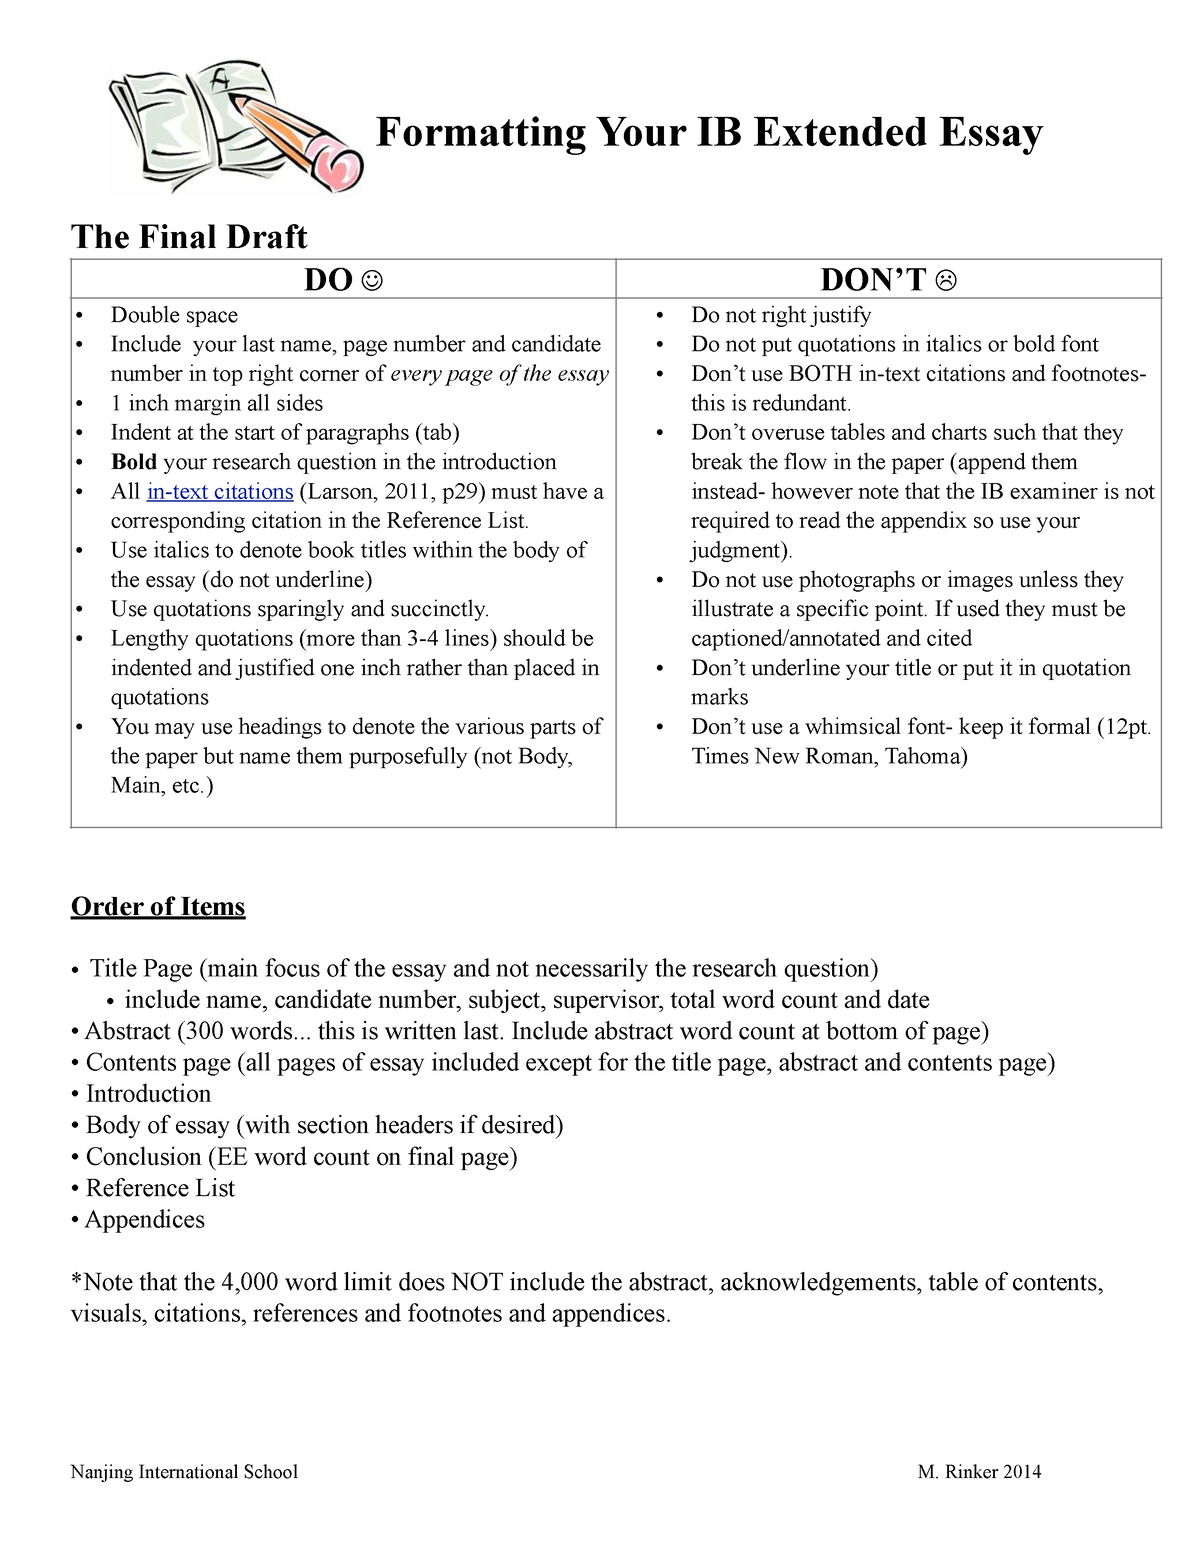 ib extended essay pdf